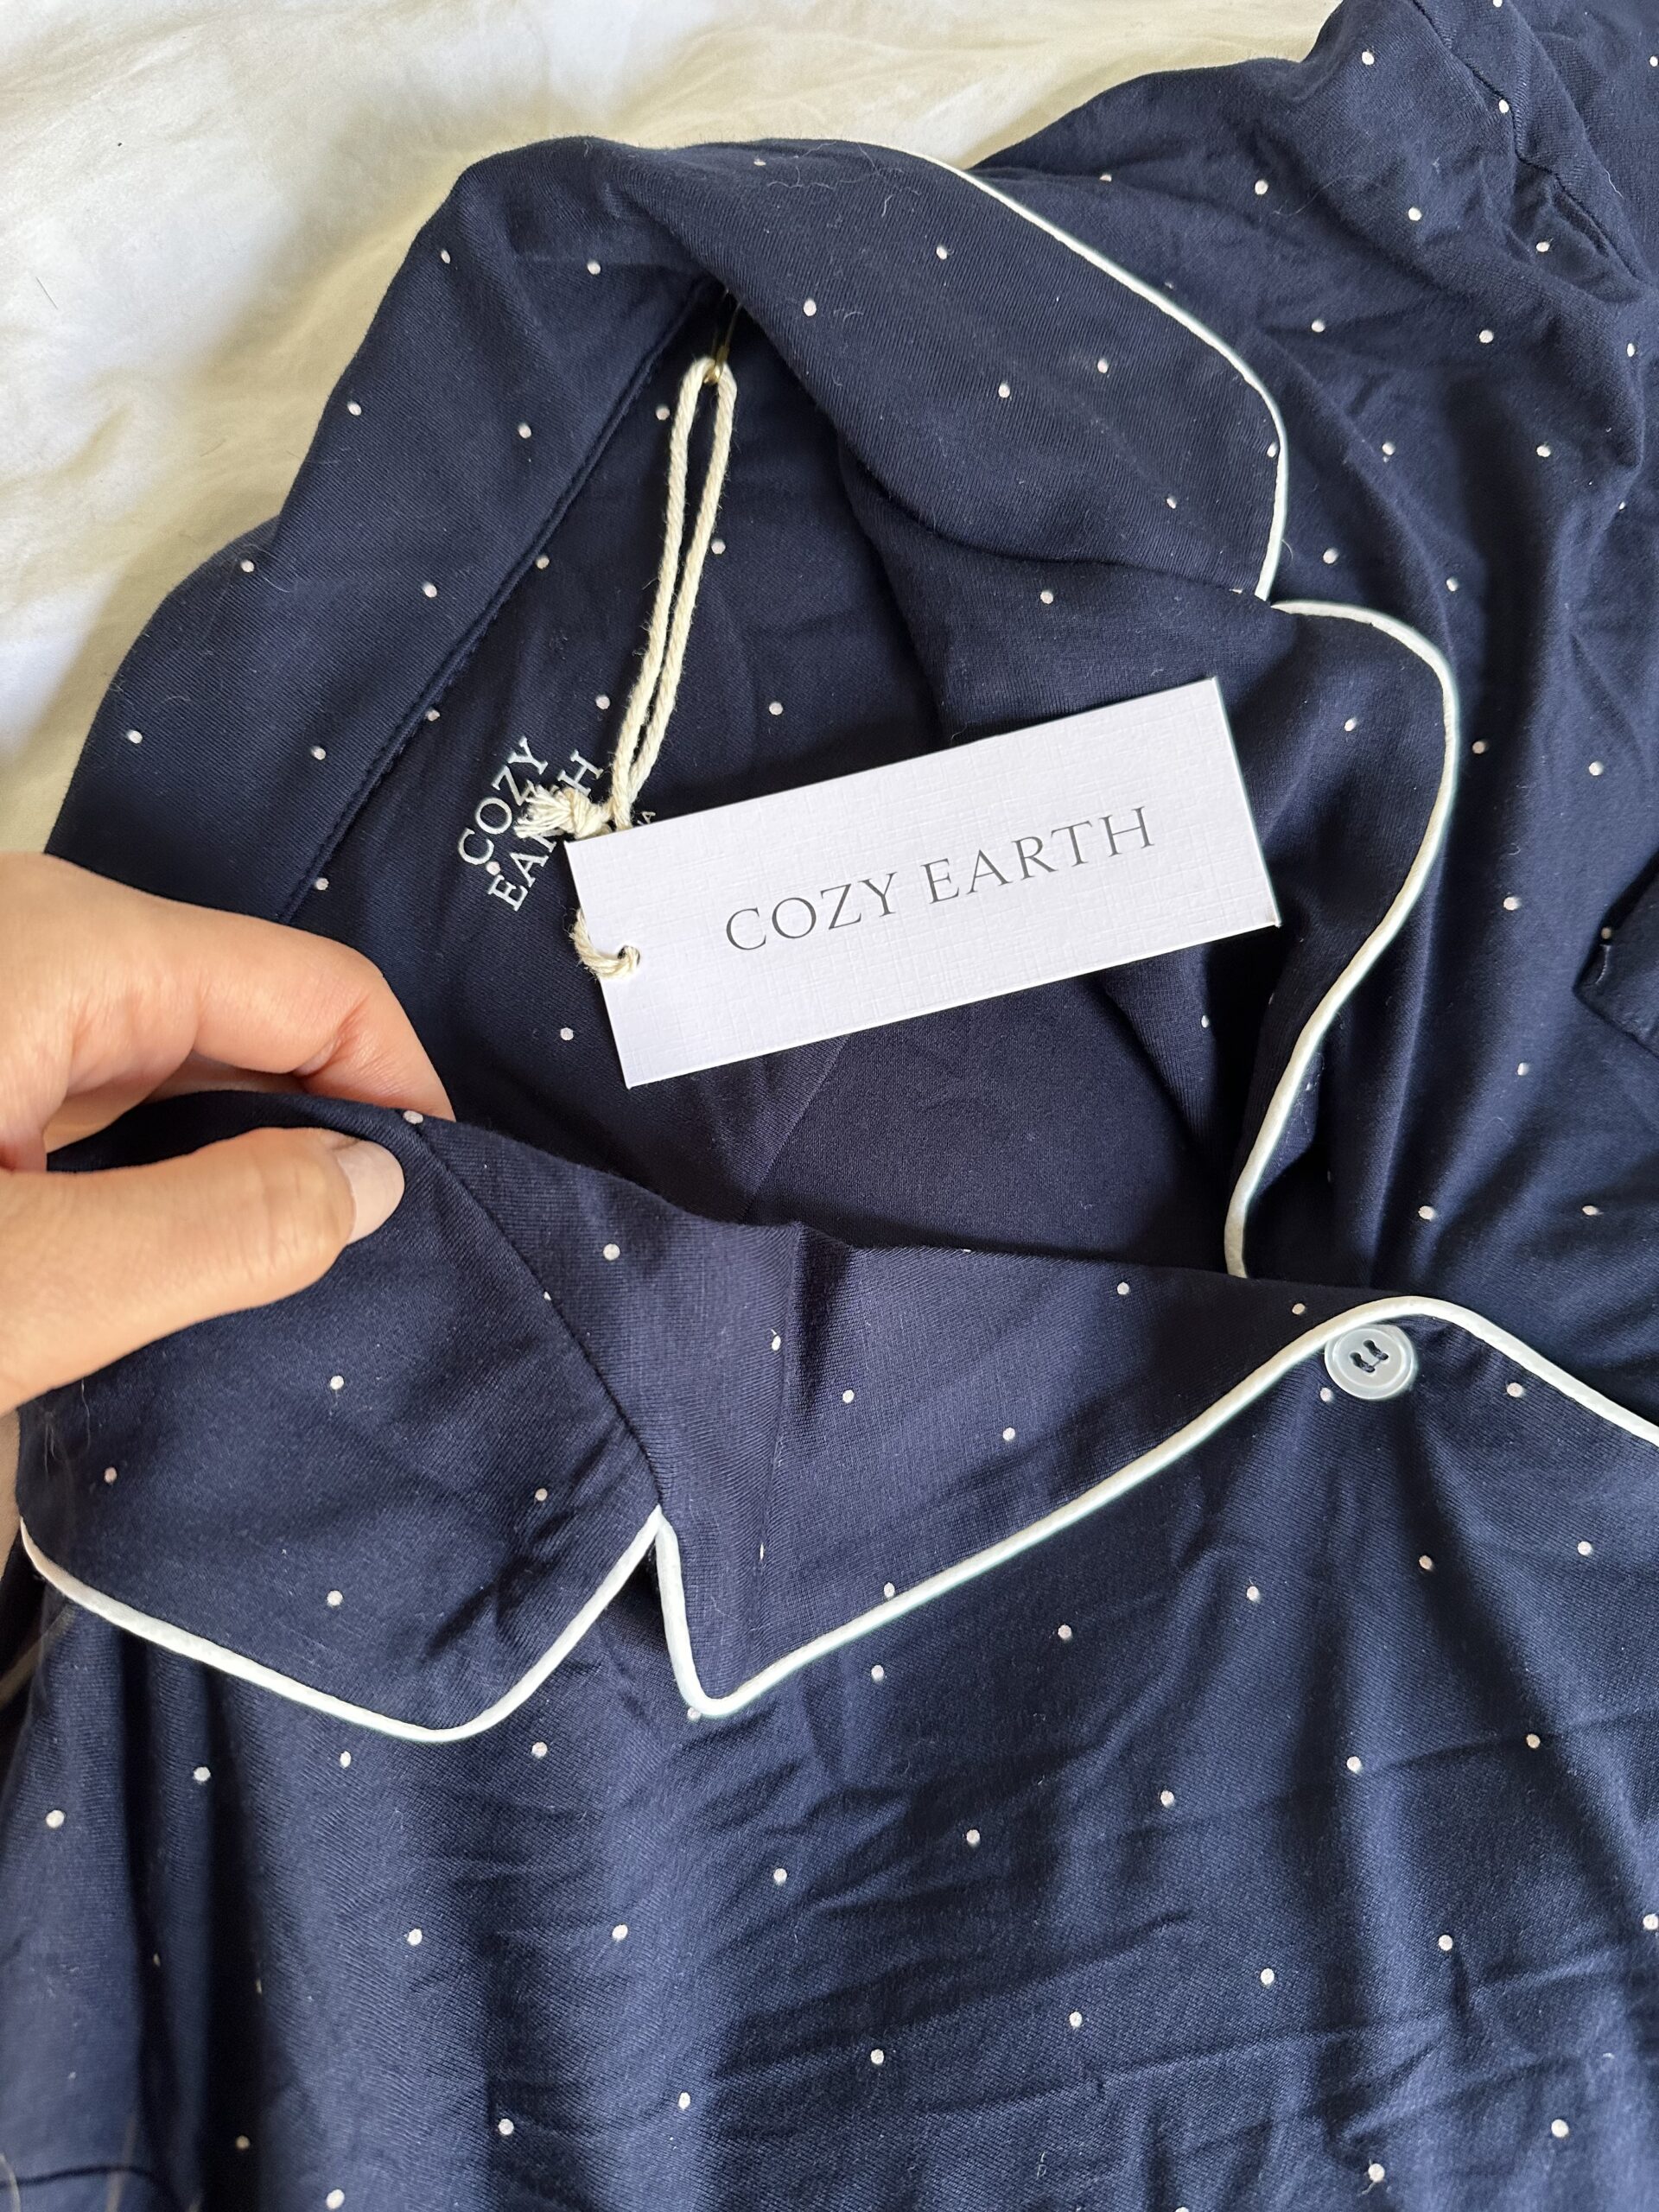 Cozy Earth pajamas